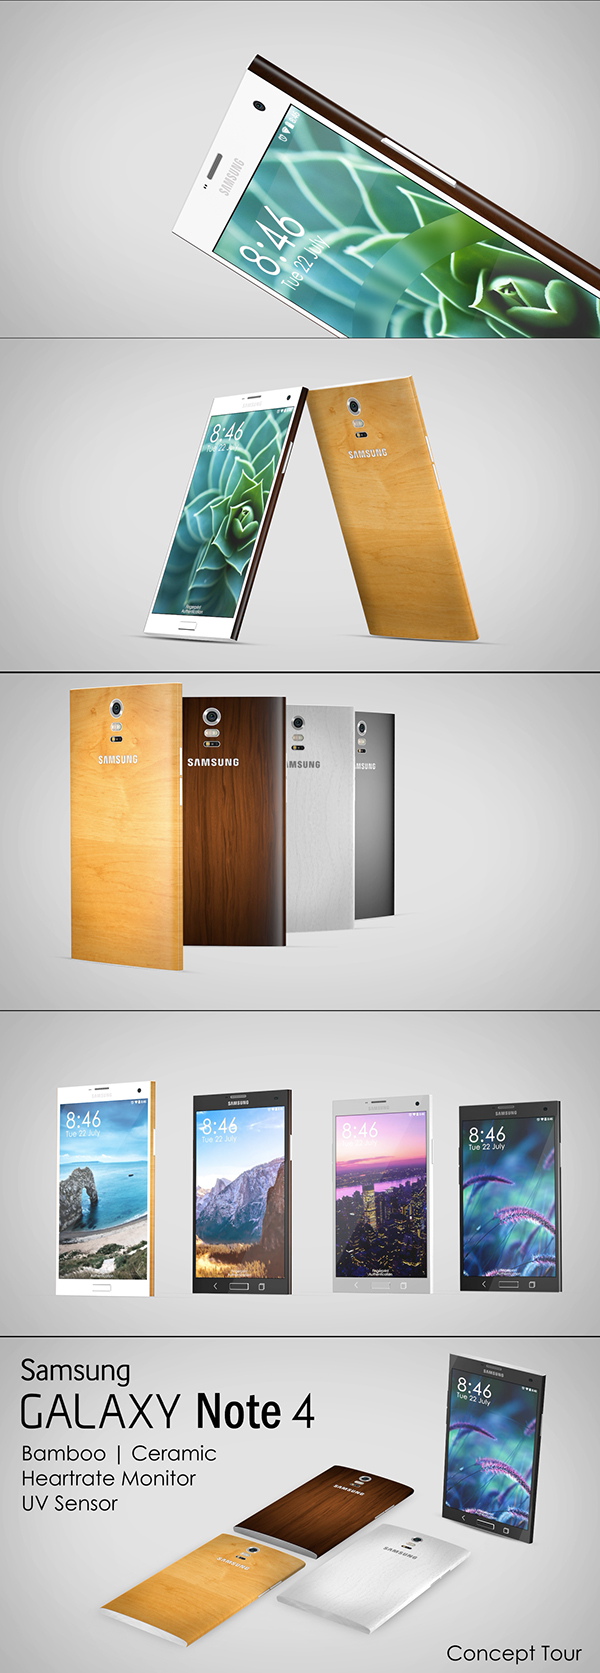 Samsung galaxy Note 4 concept design